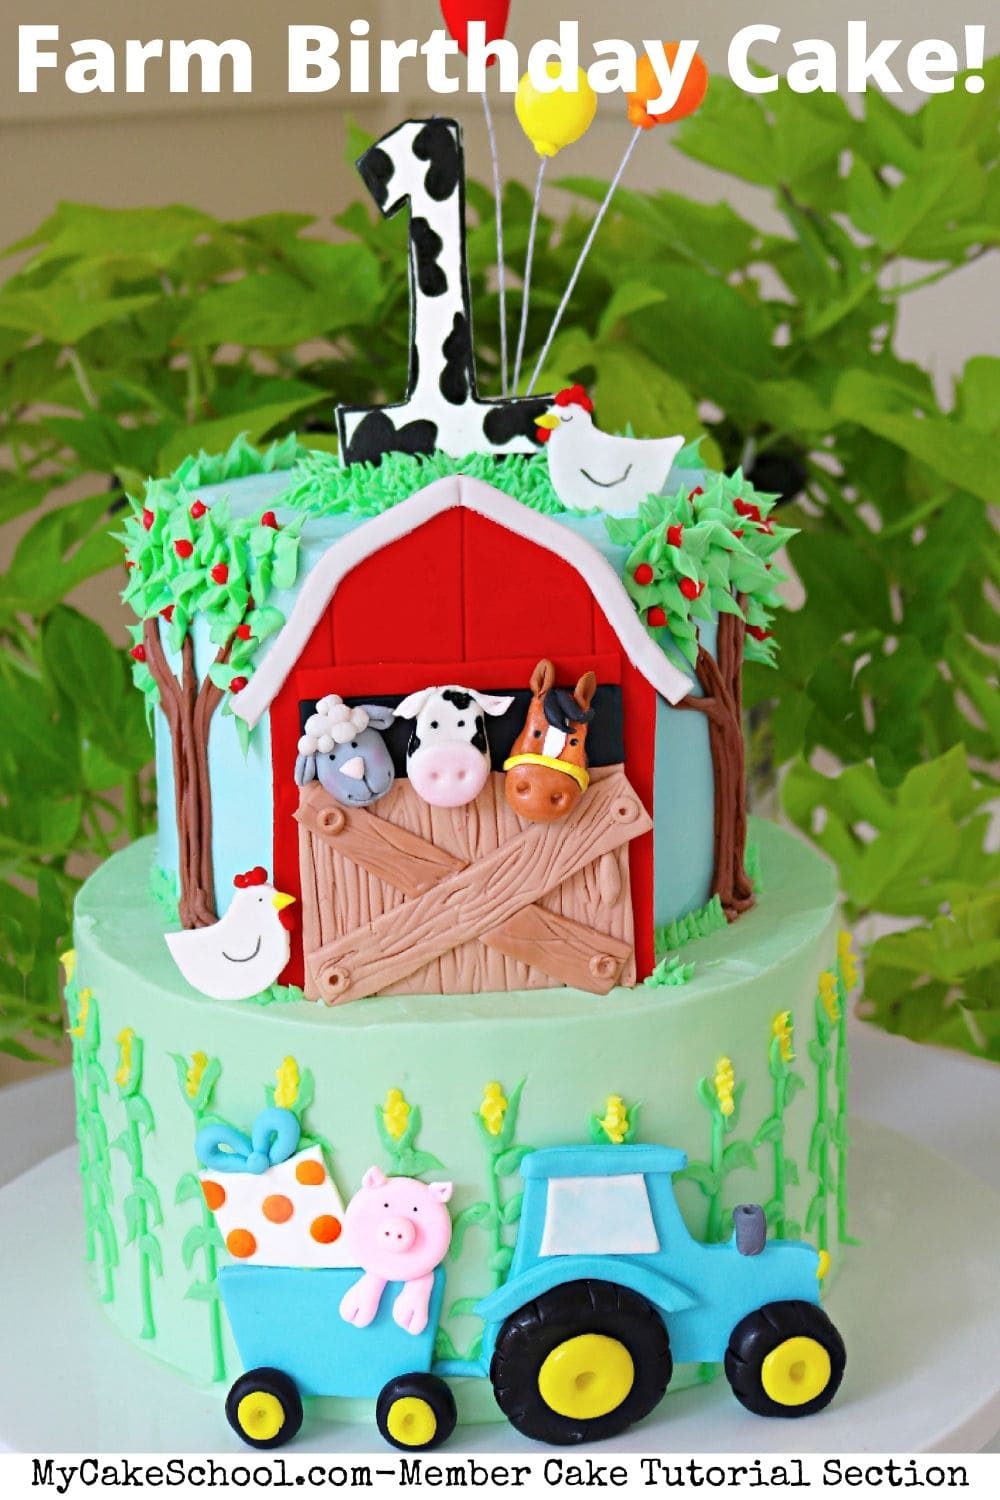 Farm Birthday Cake- Free Cake Video Tutorial - My Cake School